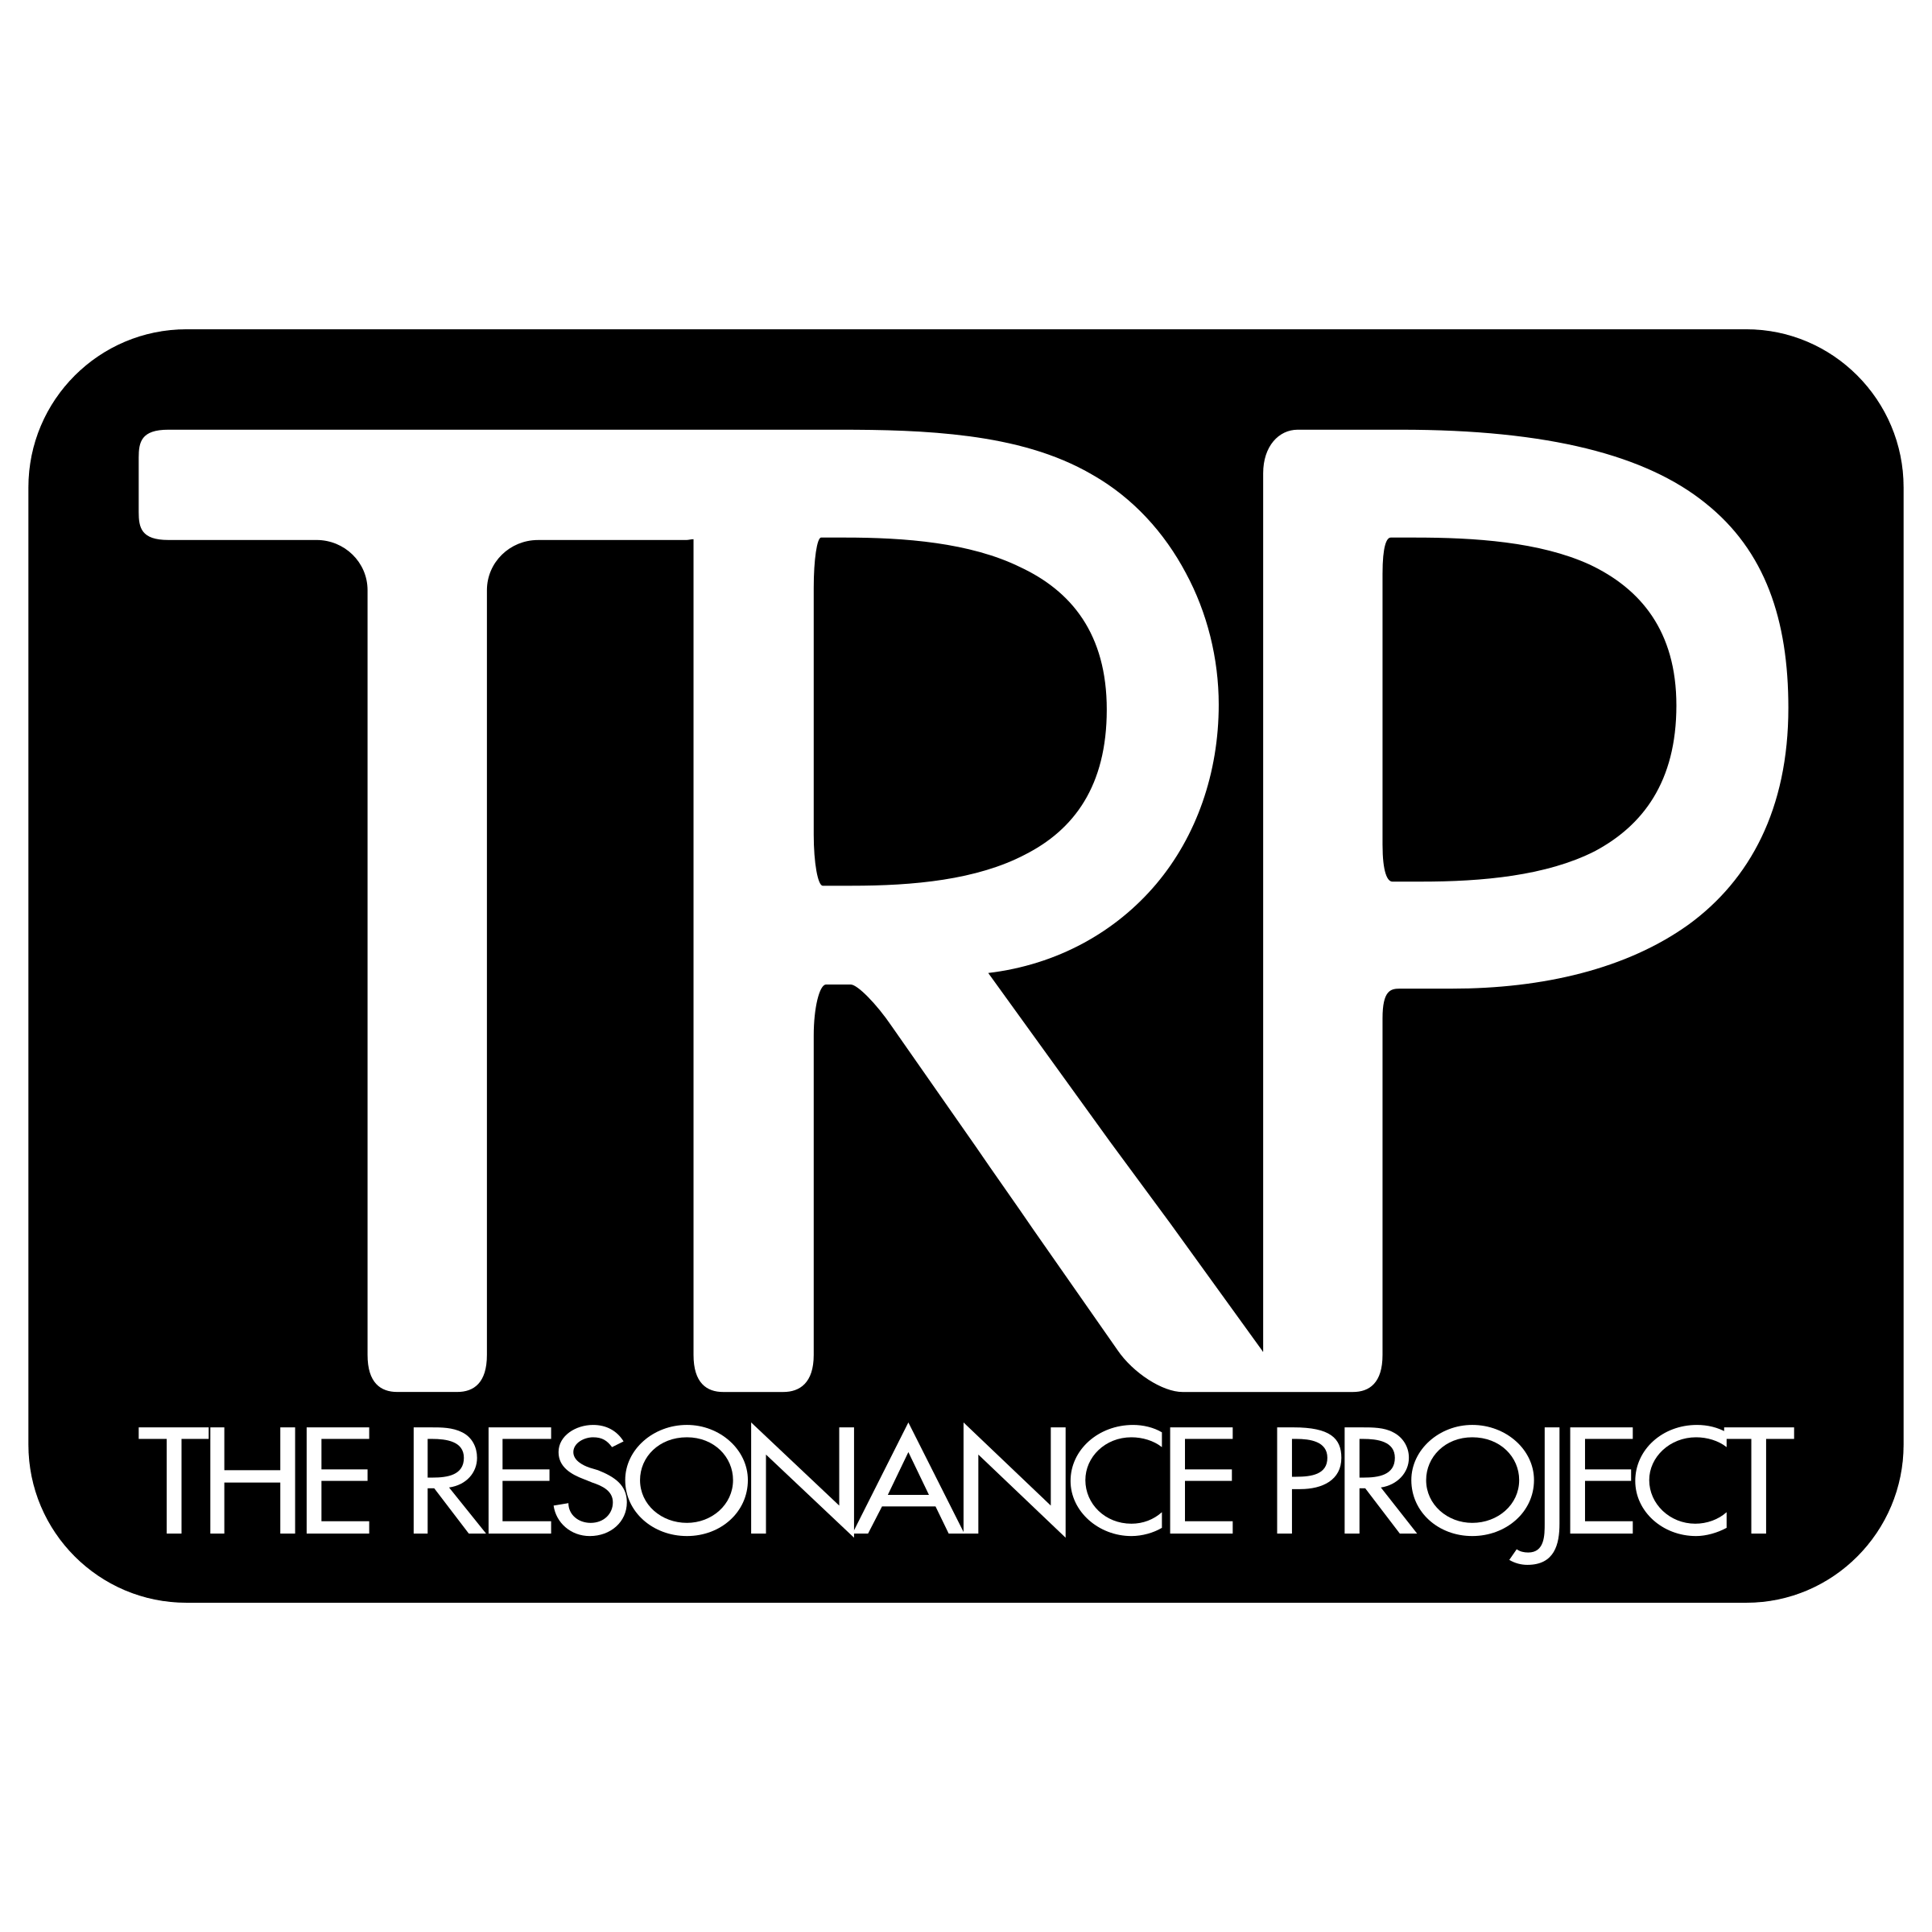 TRP Logo - TRP Logo PNG Transparent & SVG Vector - Freebie Supply